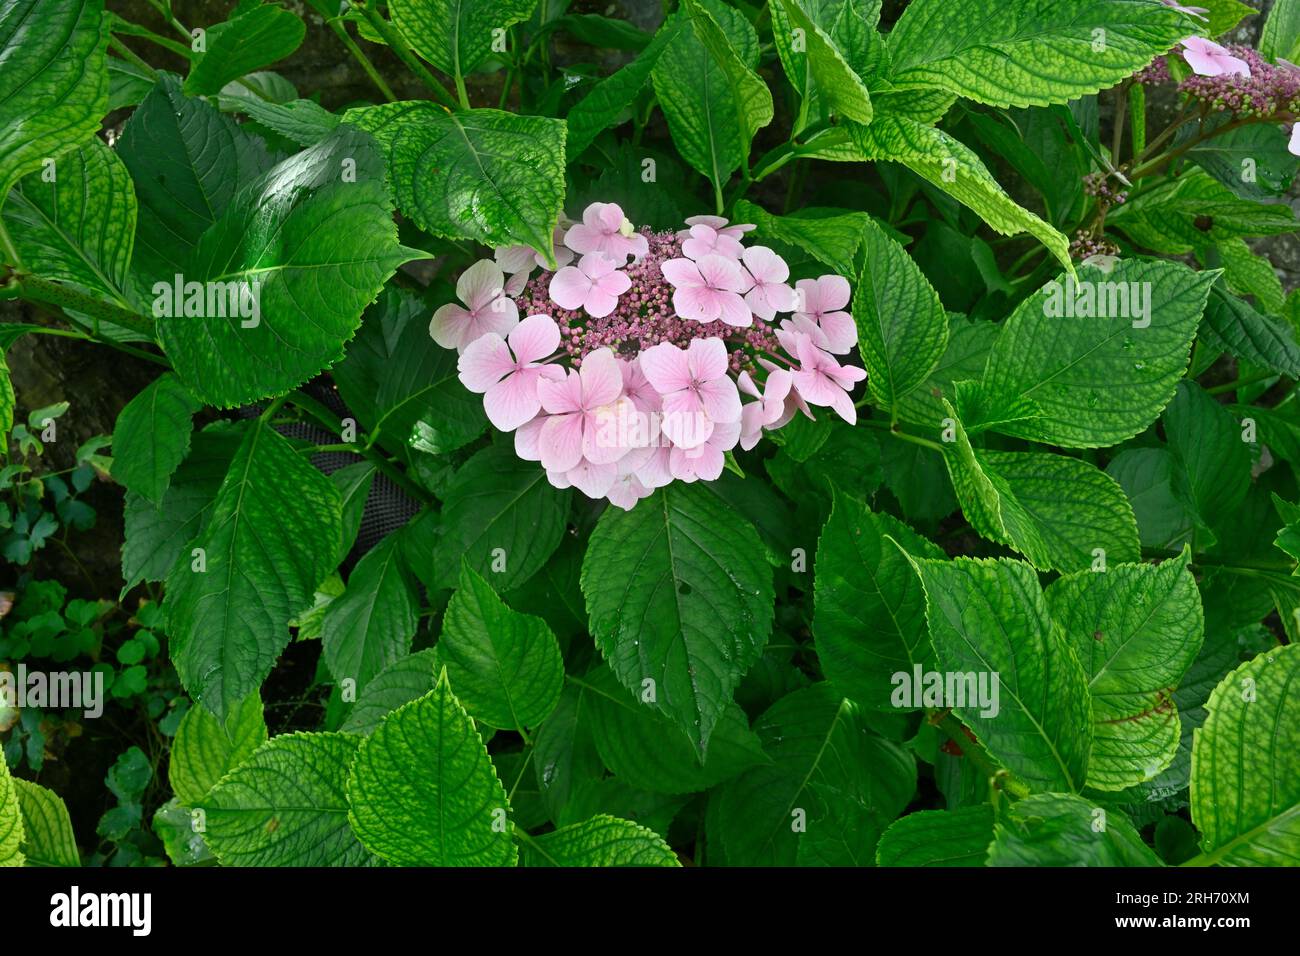 Flower head of pink lacecap hydrangea (Hydrangea macrophylla) Stock Photo